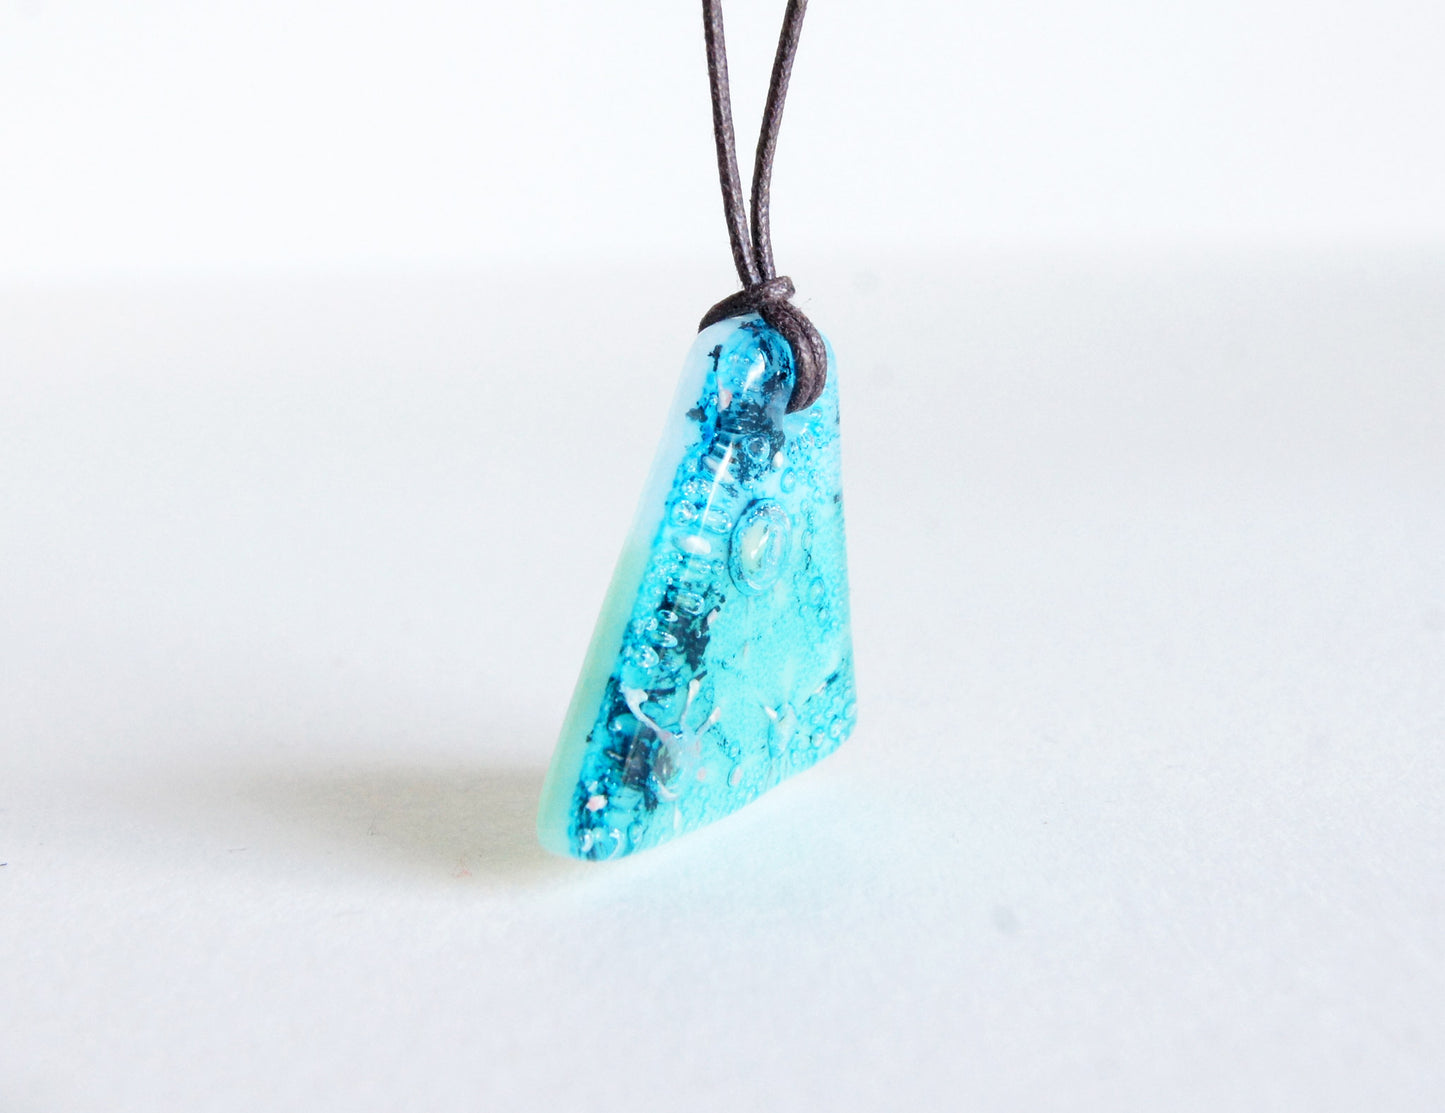 Glass Pendant Necklace #15